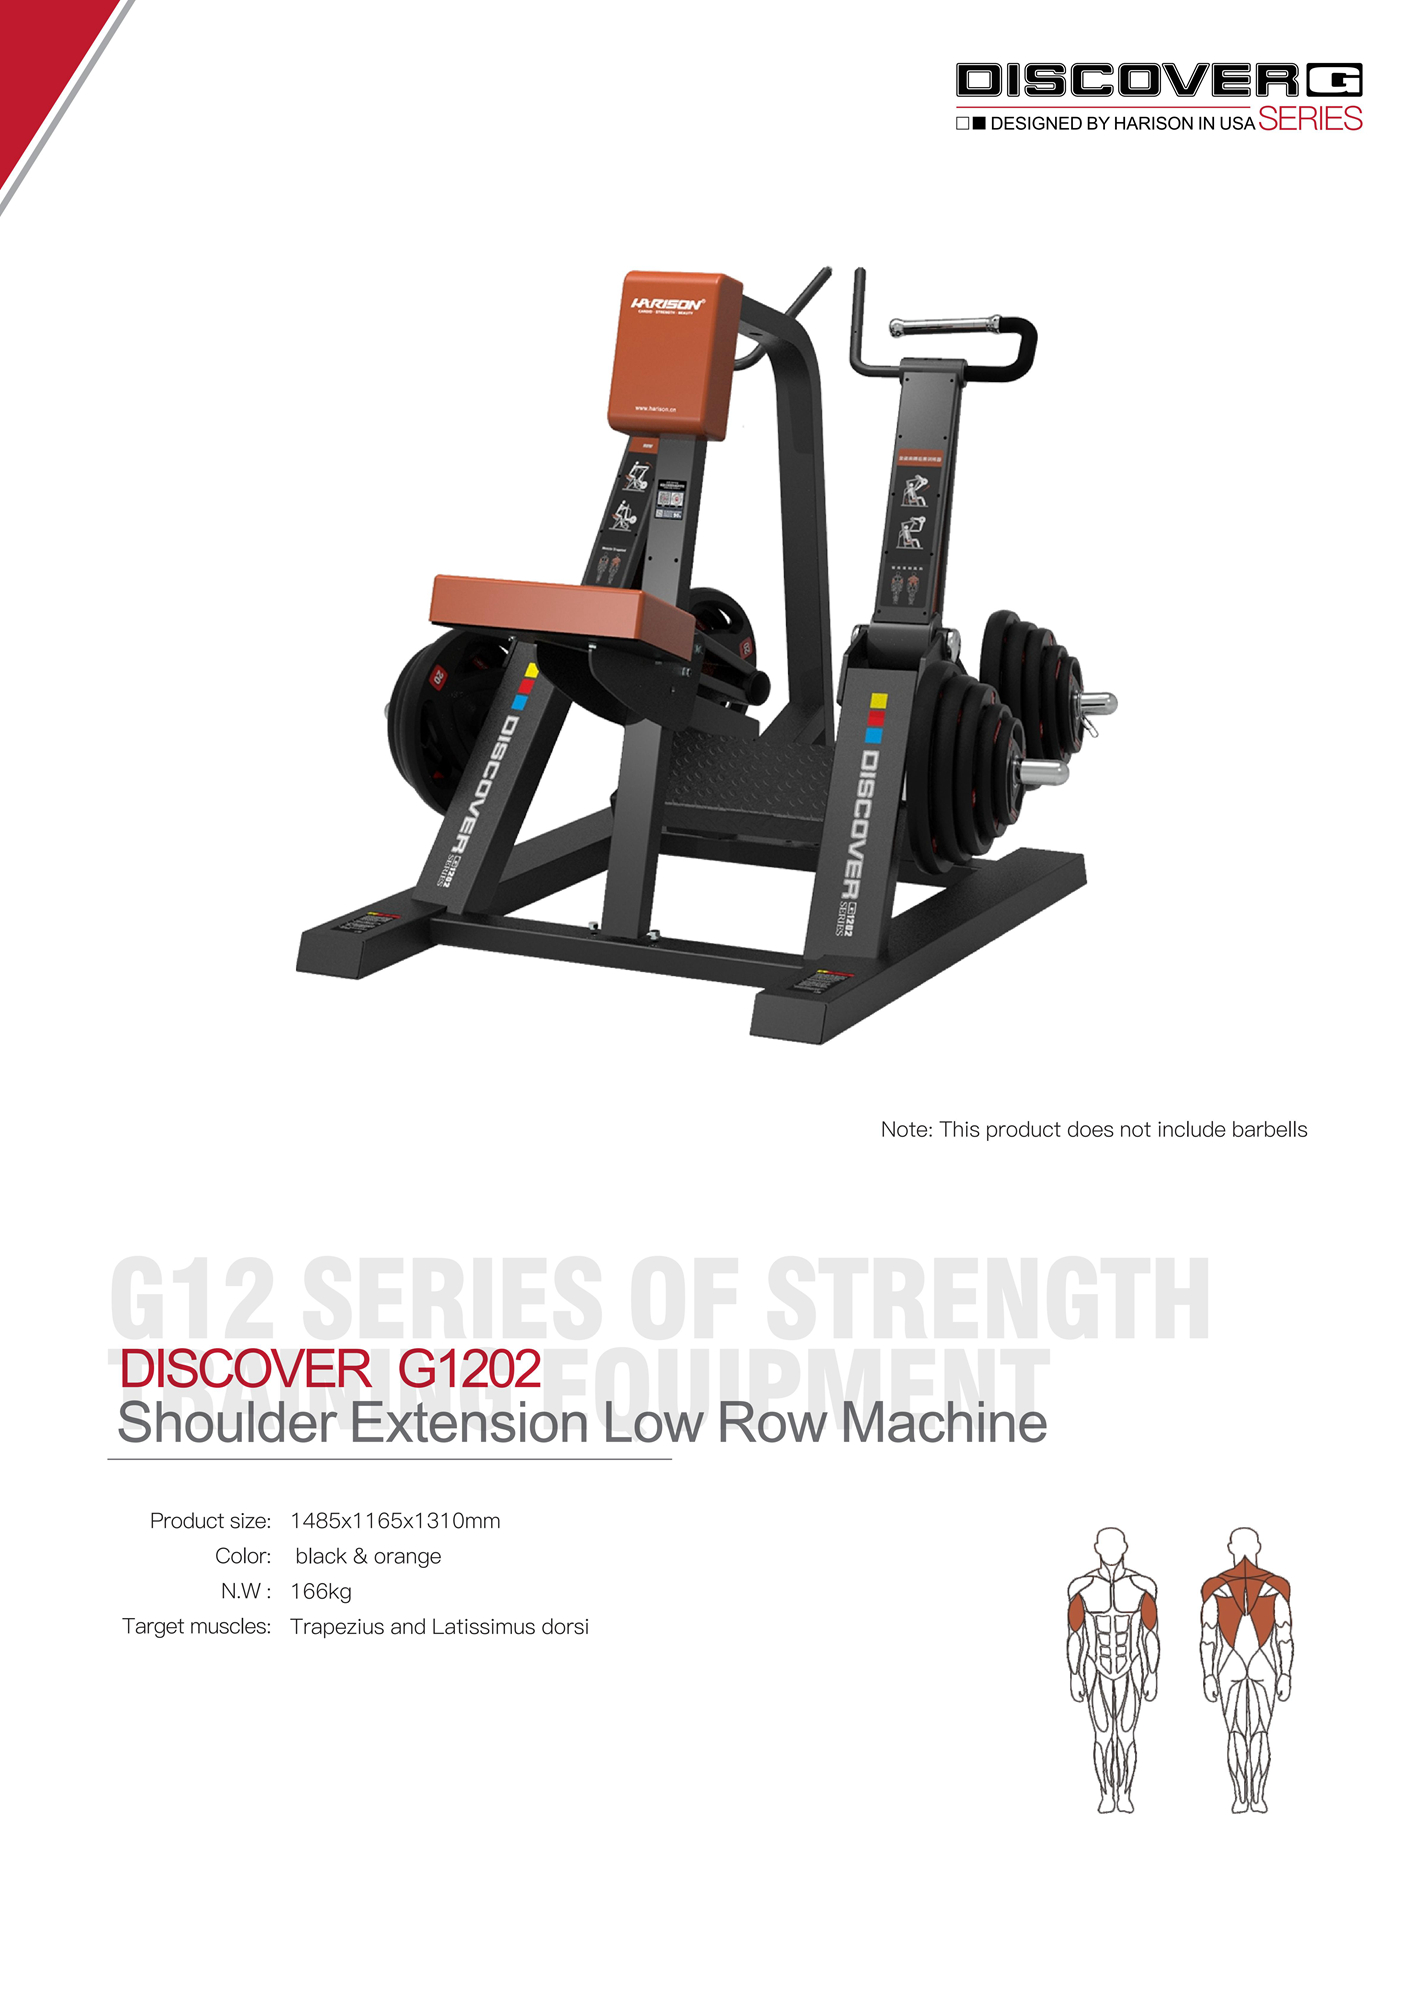 DISCOVER G1201 Chest Press Machine